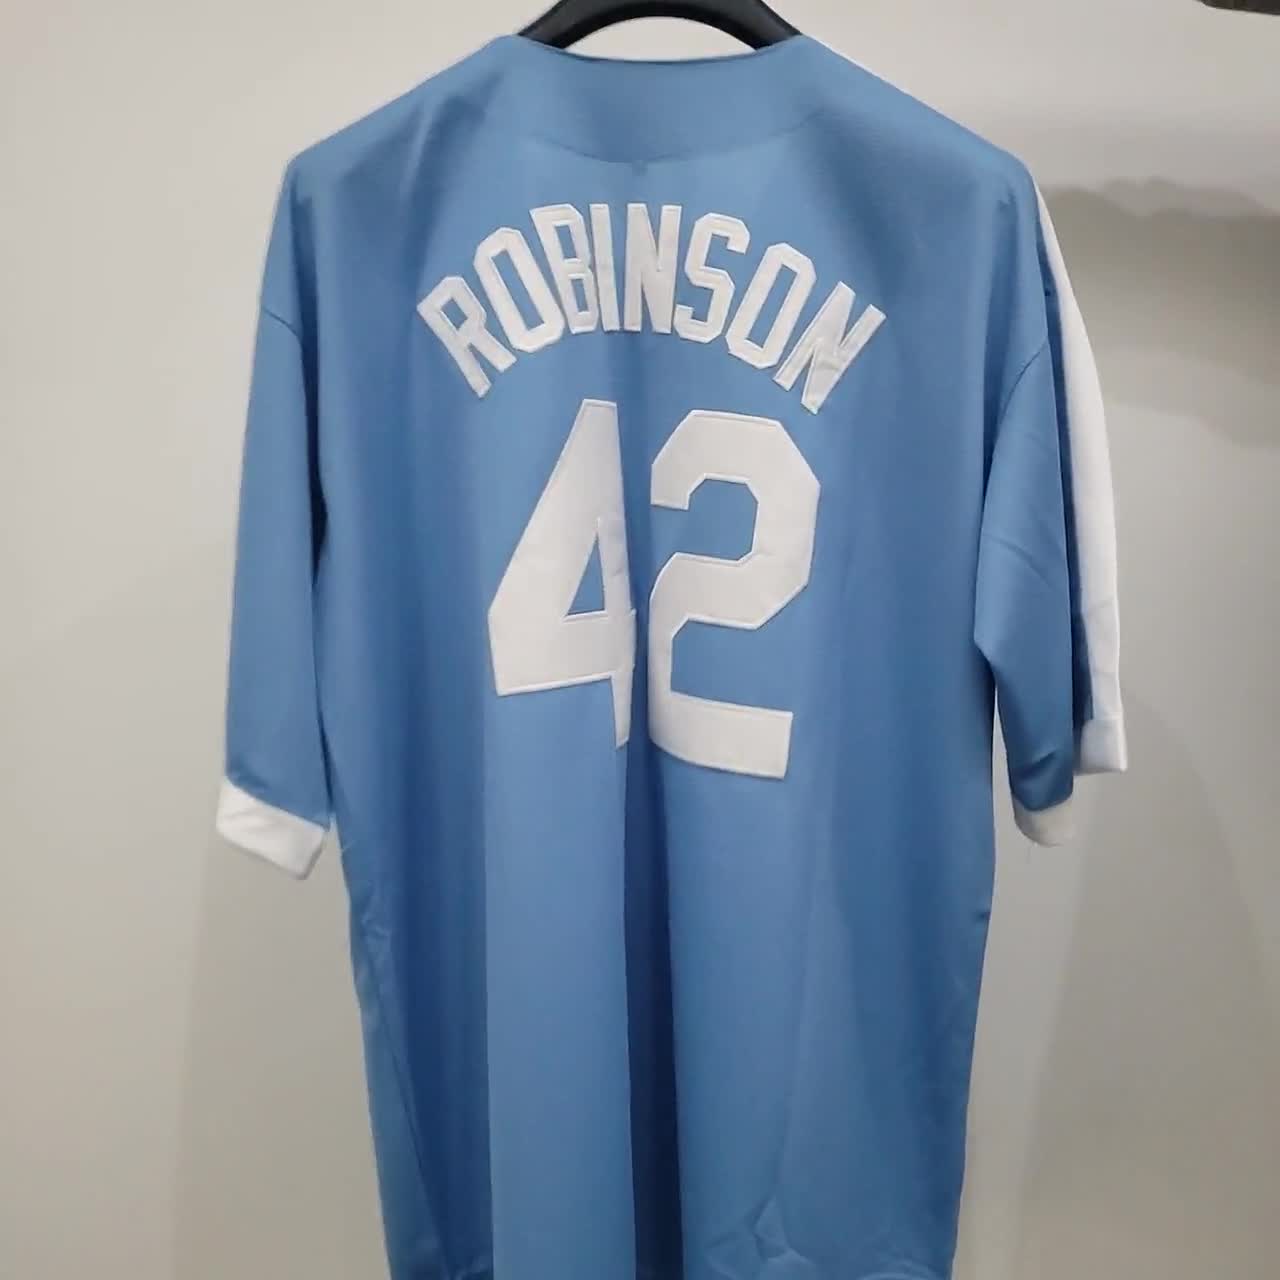 JerseyCreater Throwback Robinson #42 Brooklyn Baseball Jerseys Stitched Blue;Youth/Men/Women Size;Royal Blue;Birthday Gift Jersey